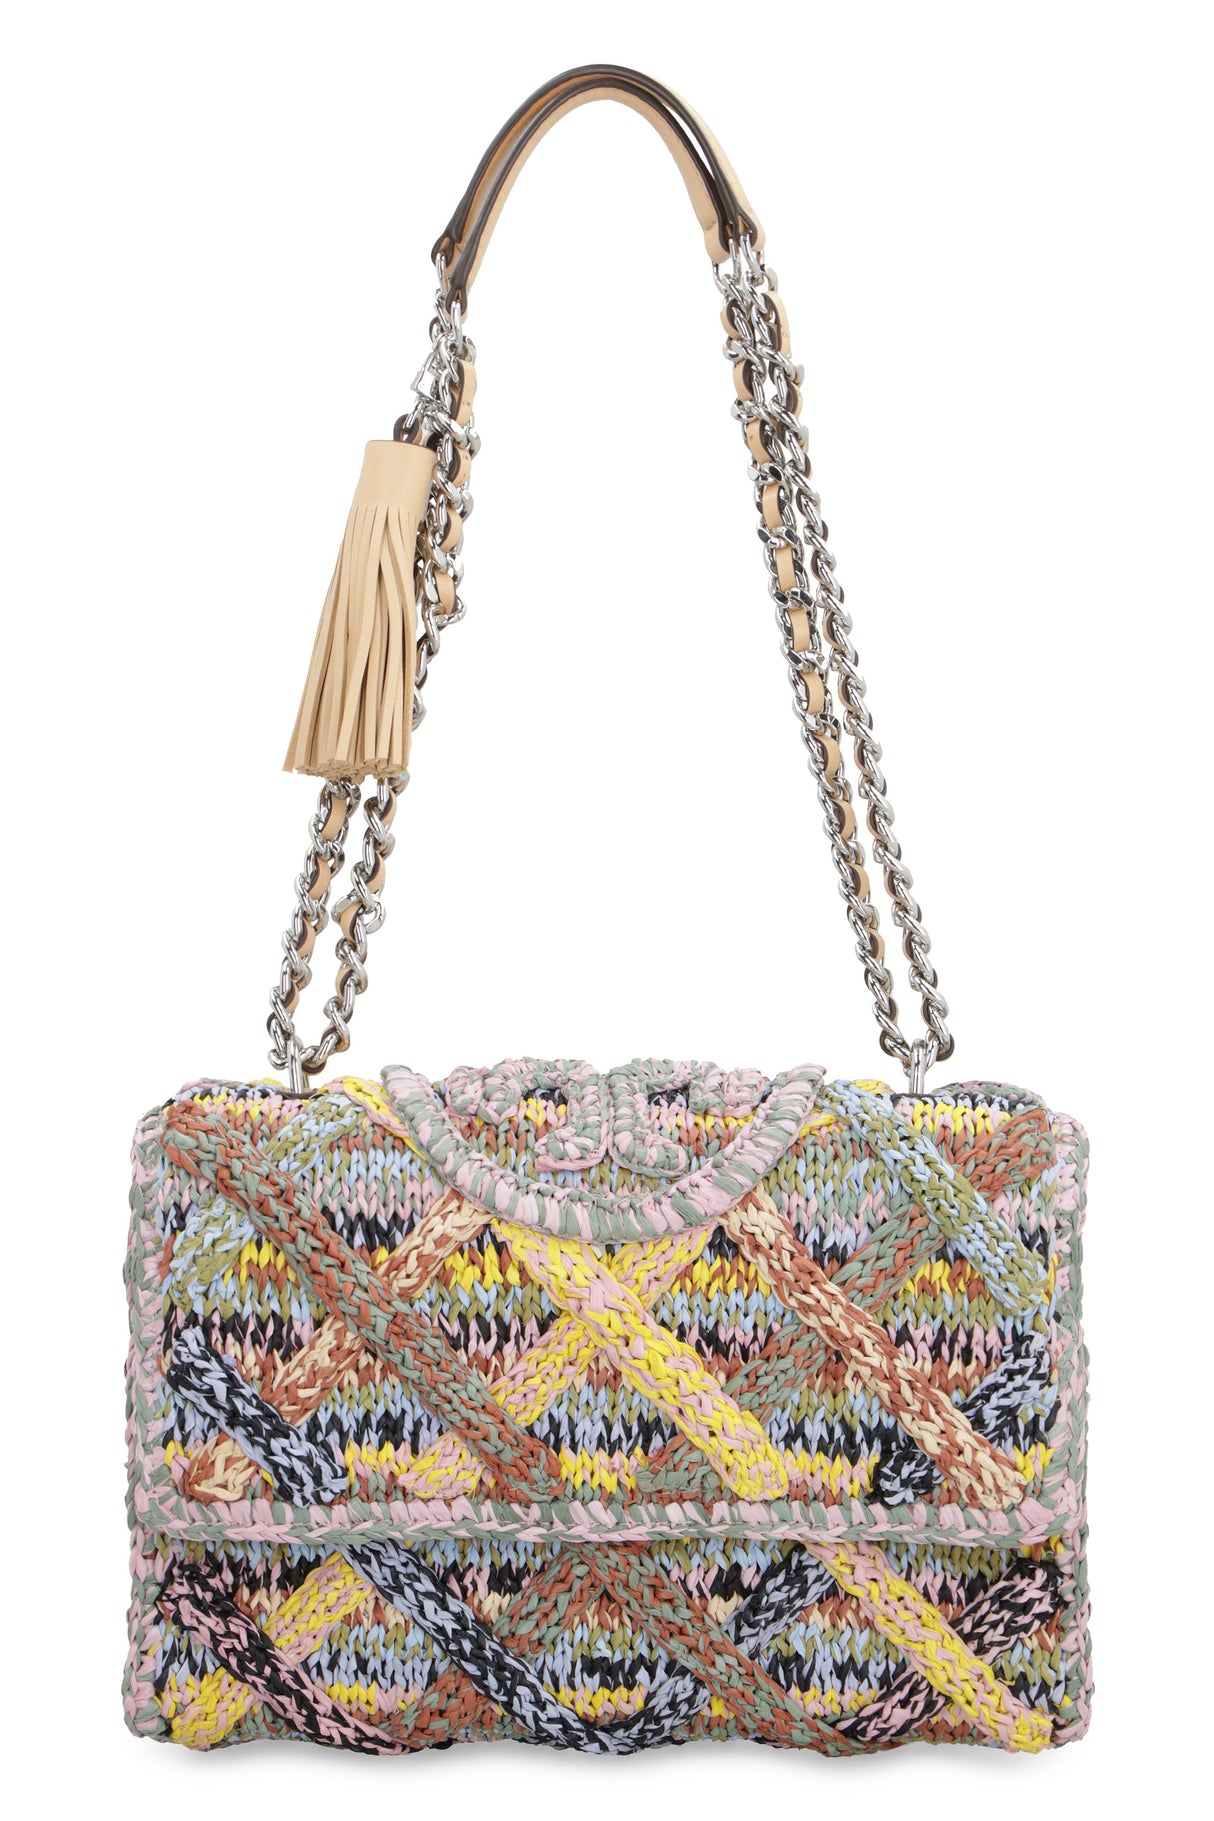 TORY BURCH Fleming Raffia Shoulder Handbag - Woven Multicolor Bag for Women